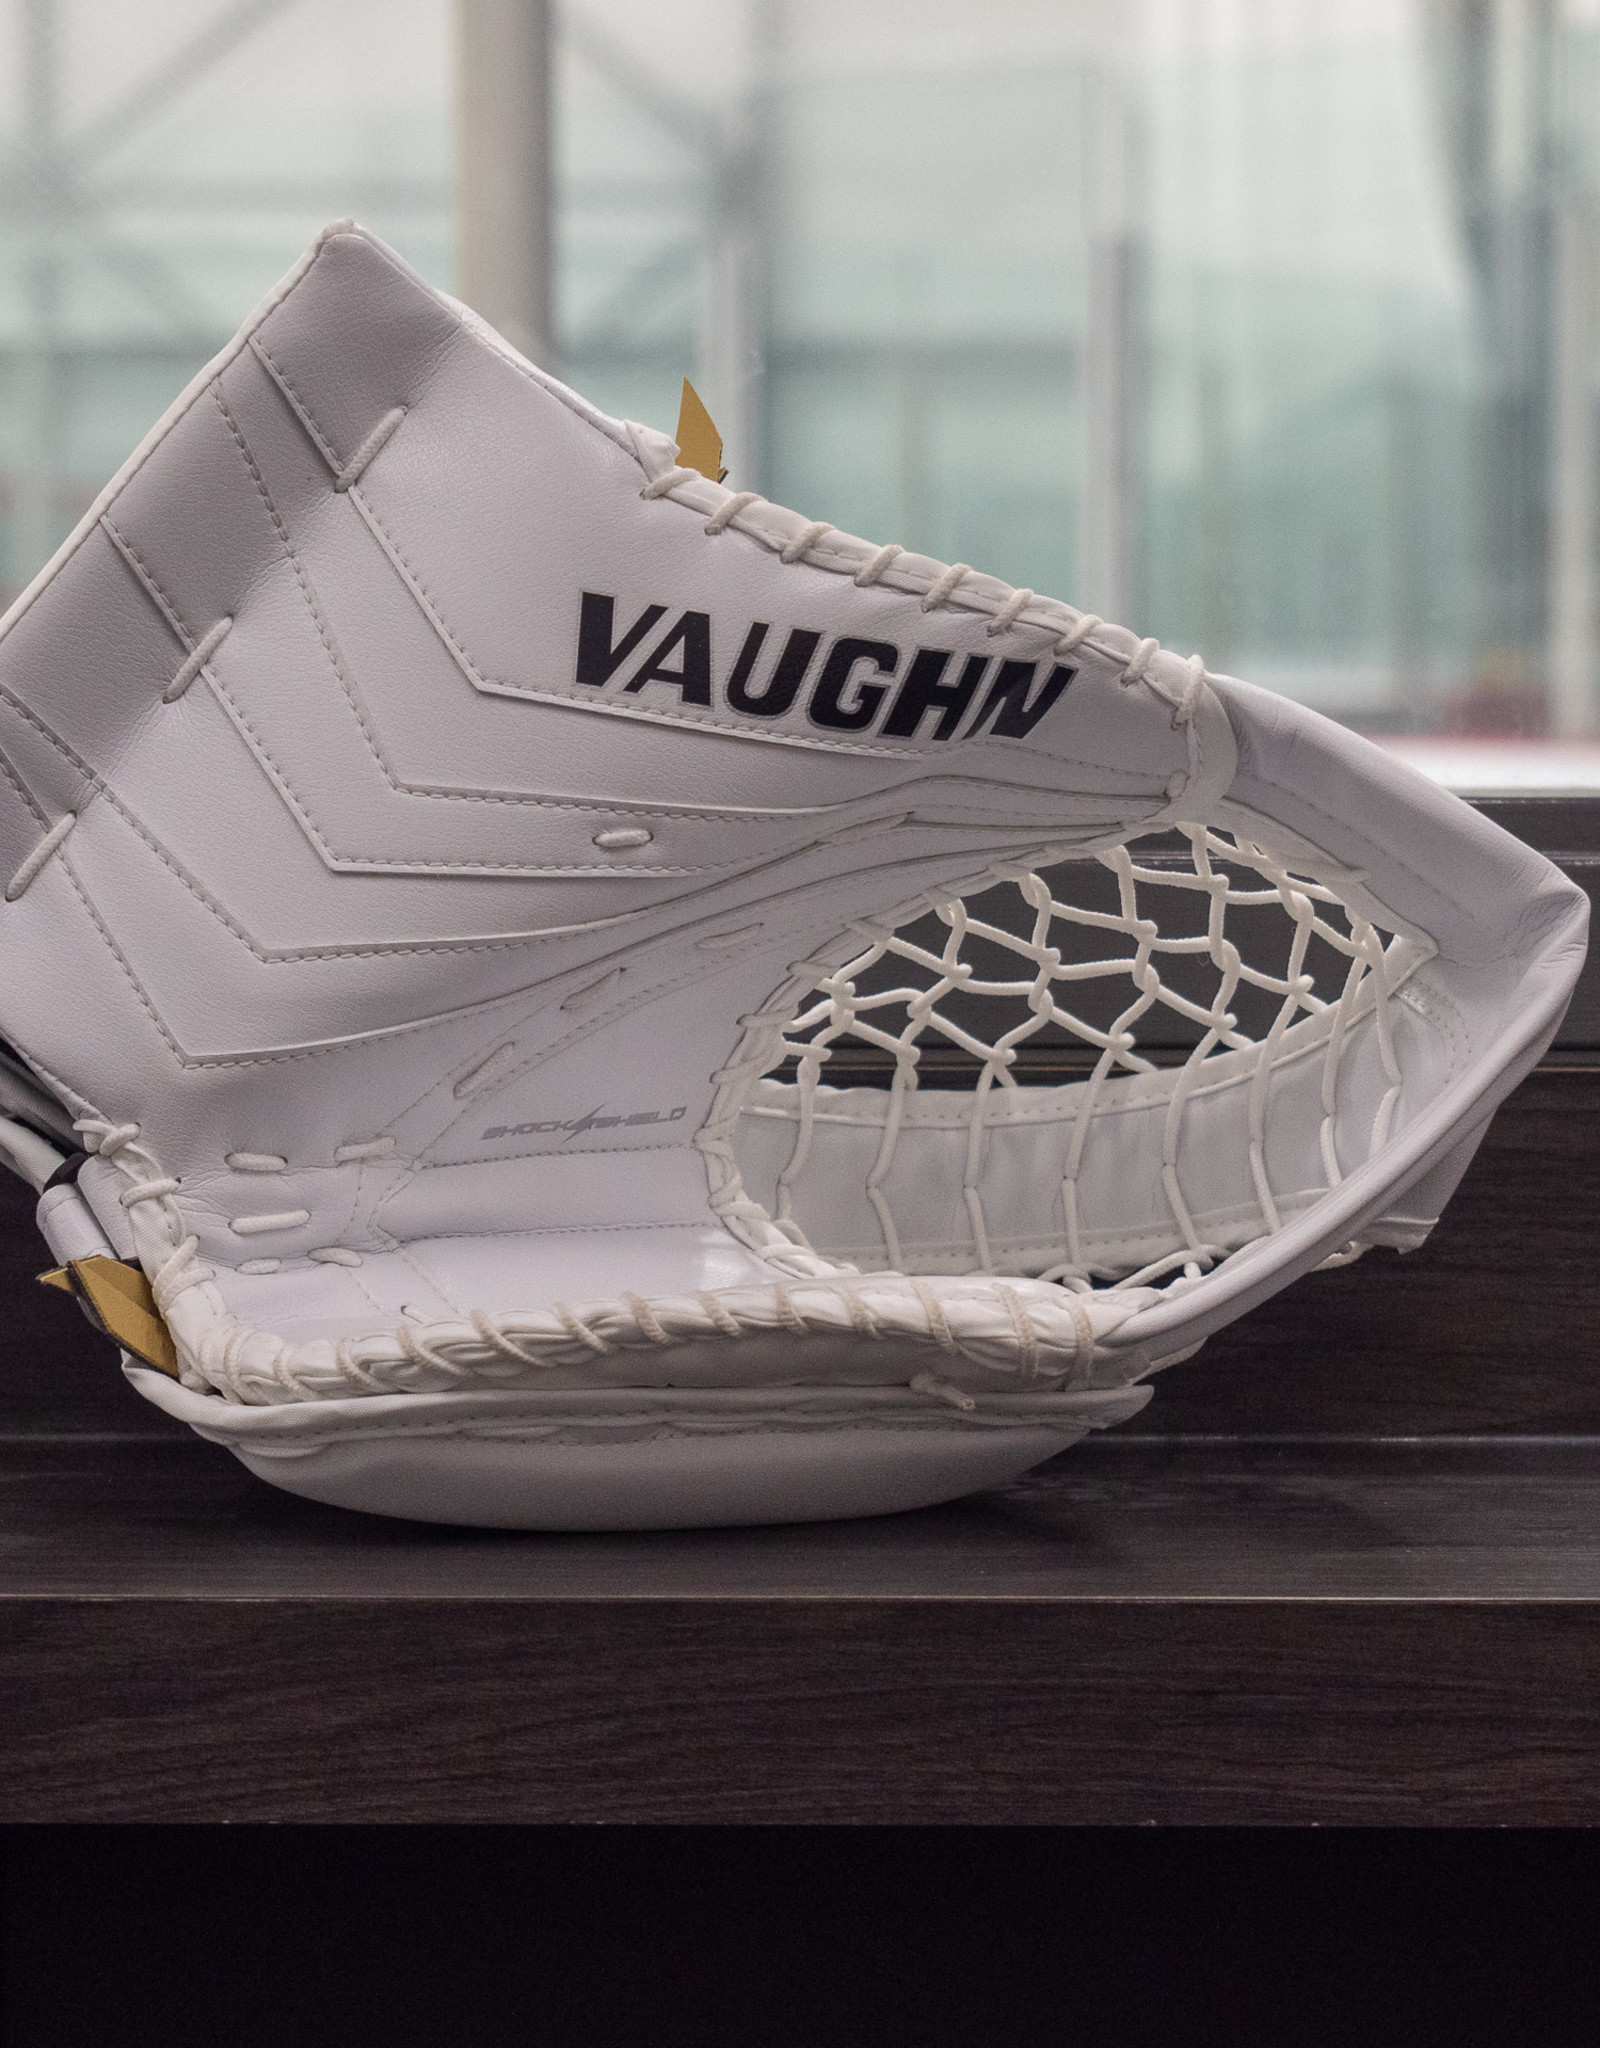 Vaughn Vaughn T Ventus SLR2 ST Pro Carbon Catch Glove - All White